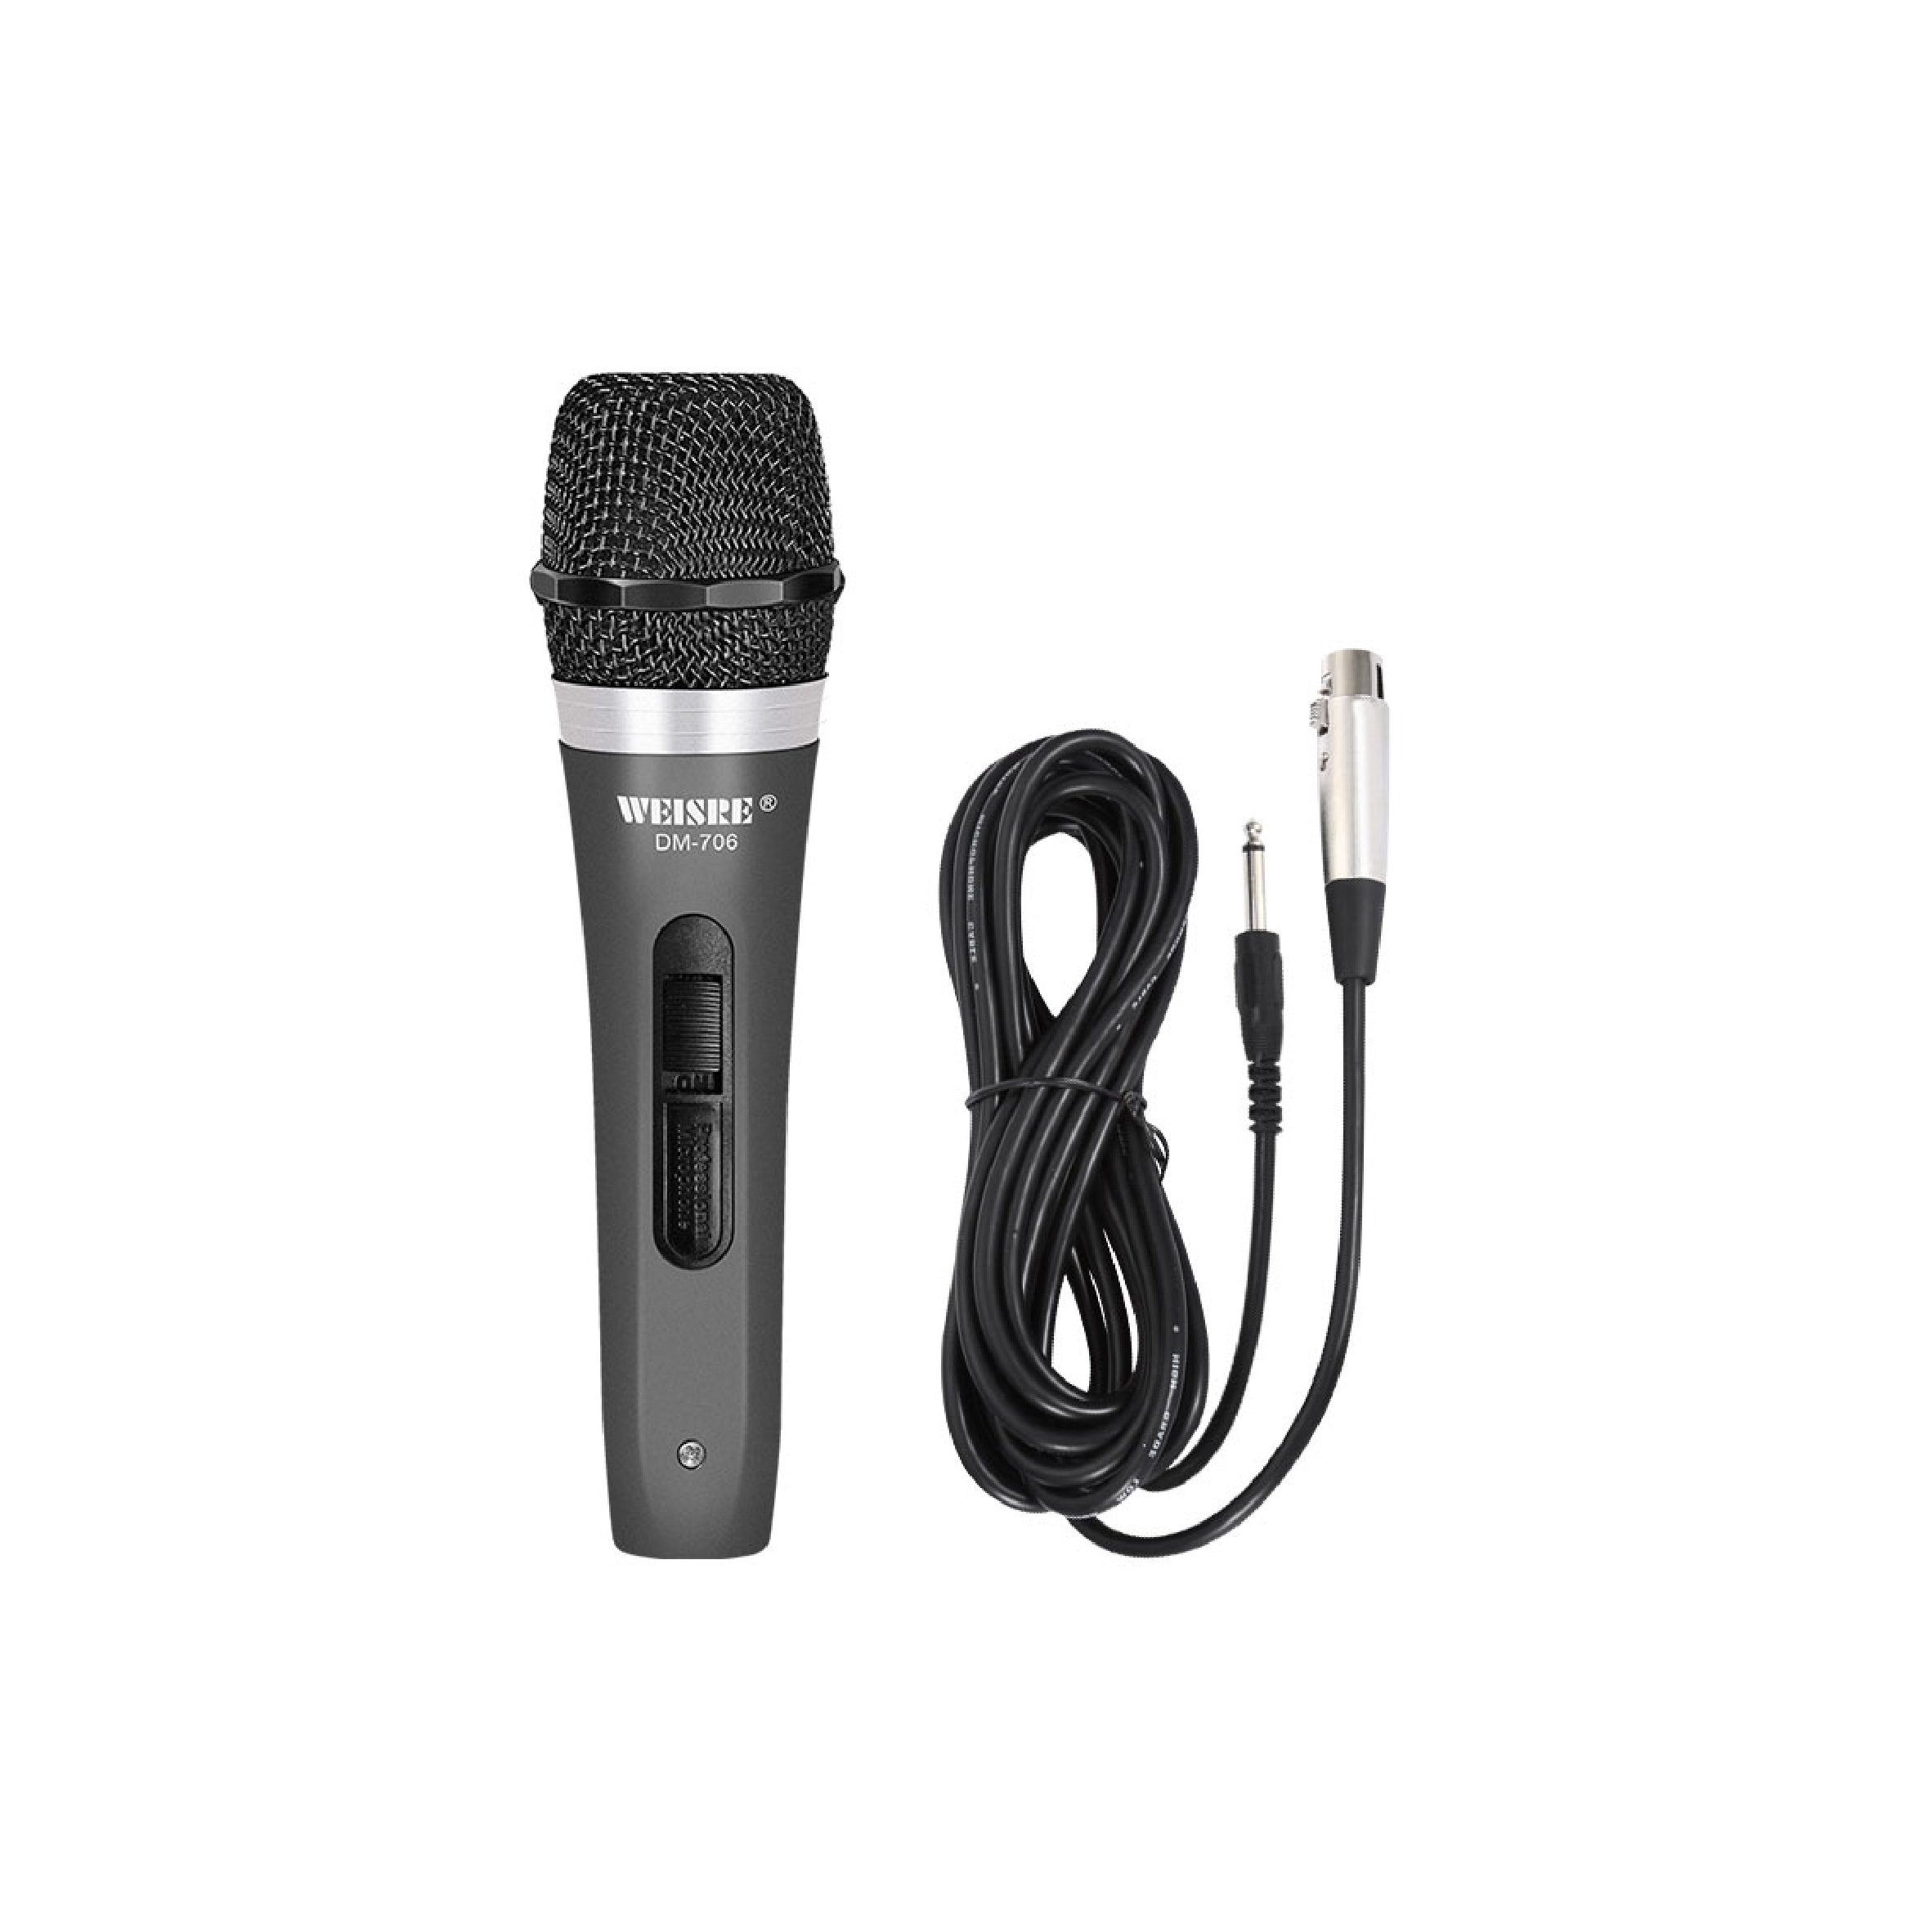 Weisre Dm Series Special-Purpose Microphone , DM-706